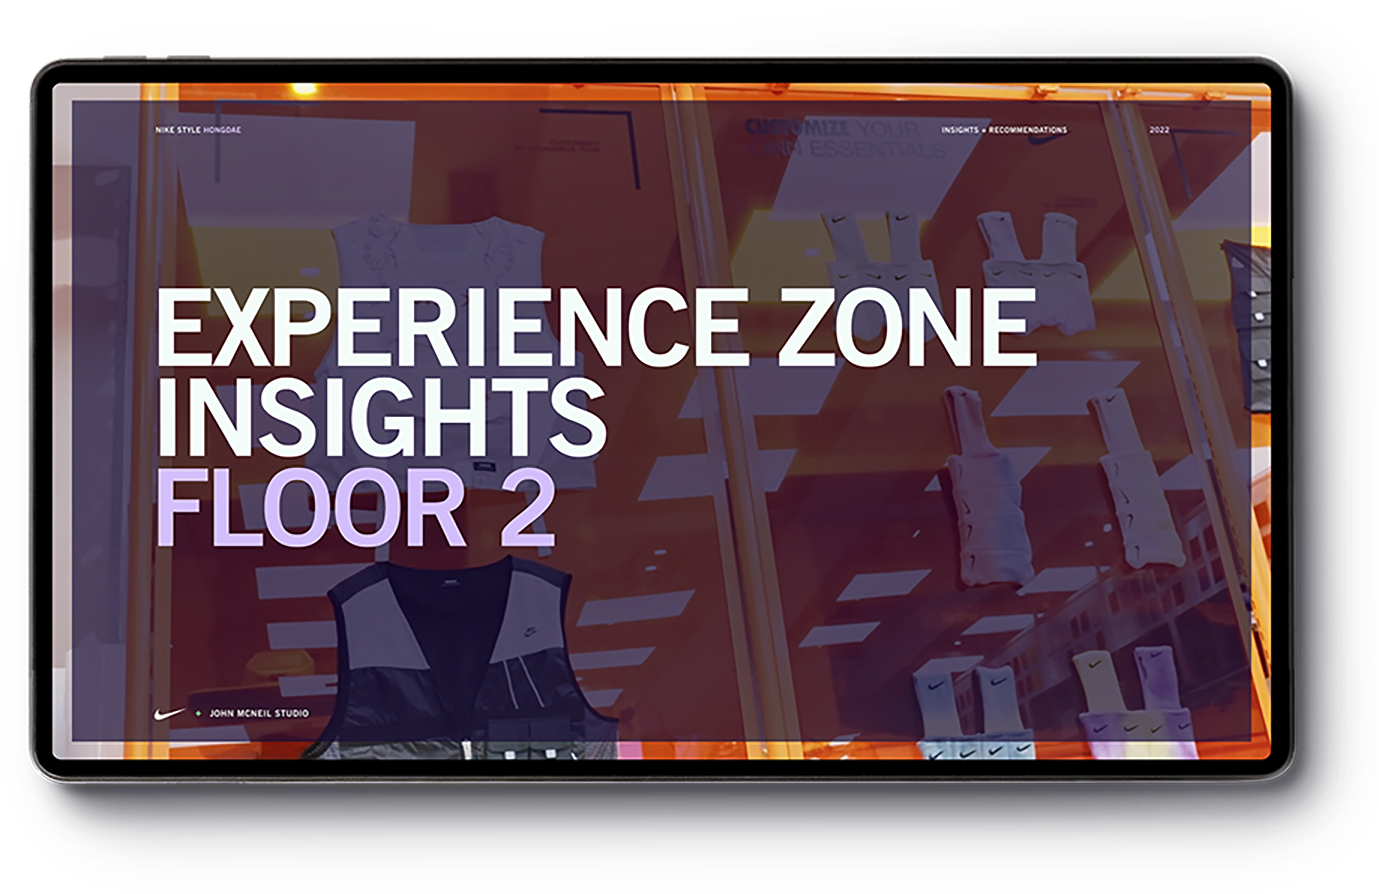 Insights-floor2@2x-2